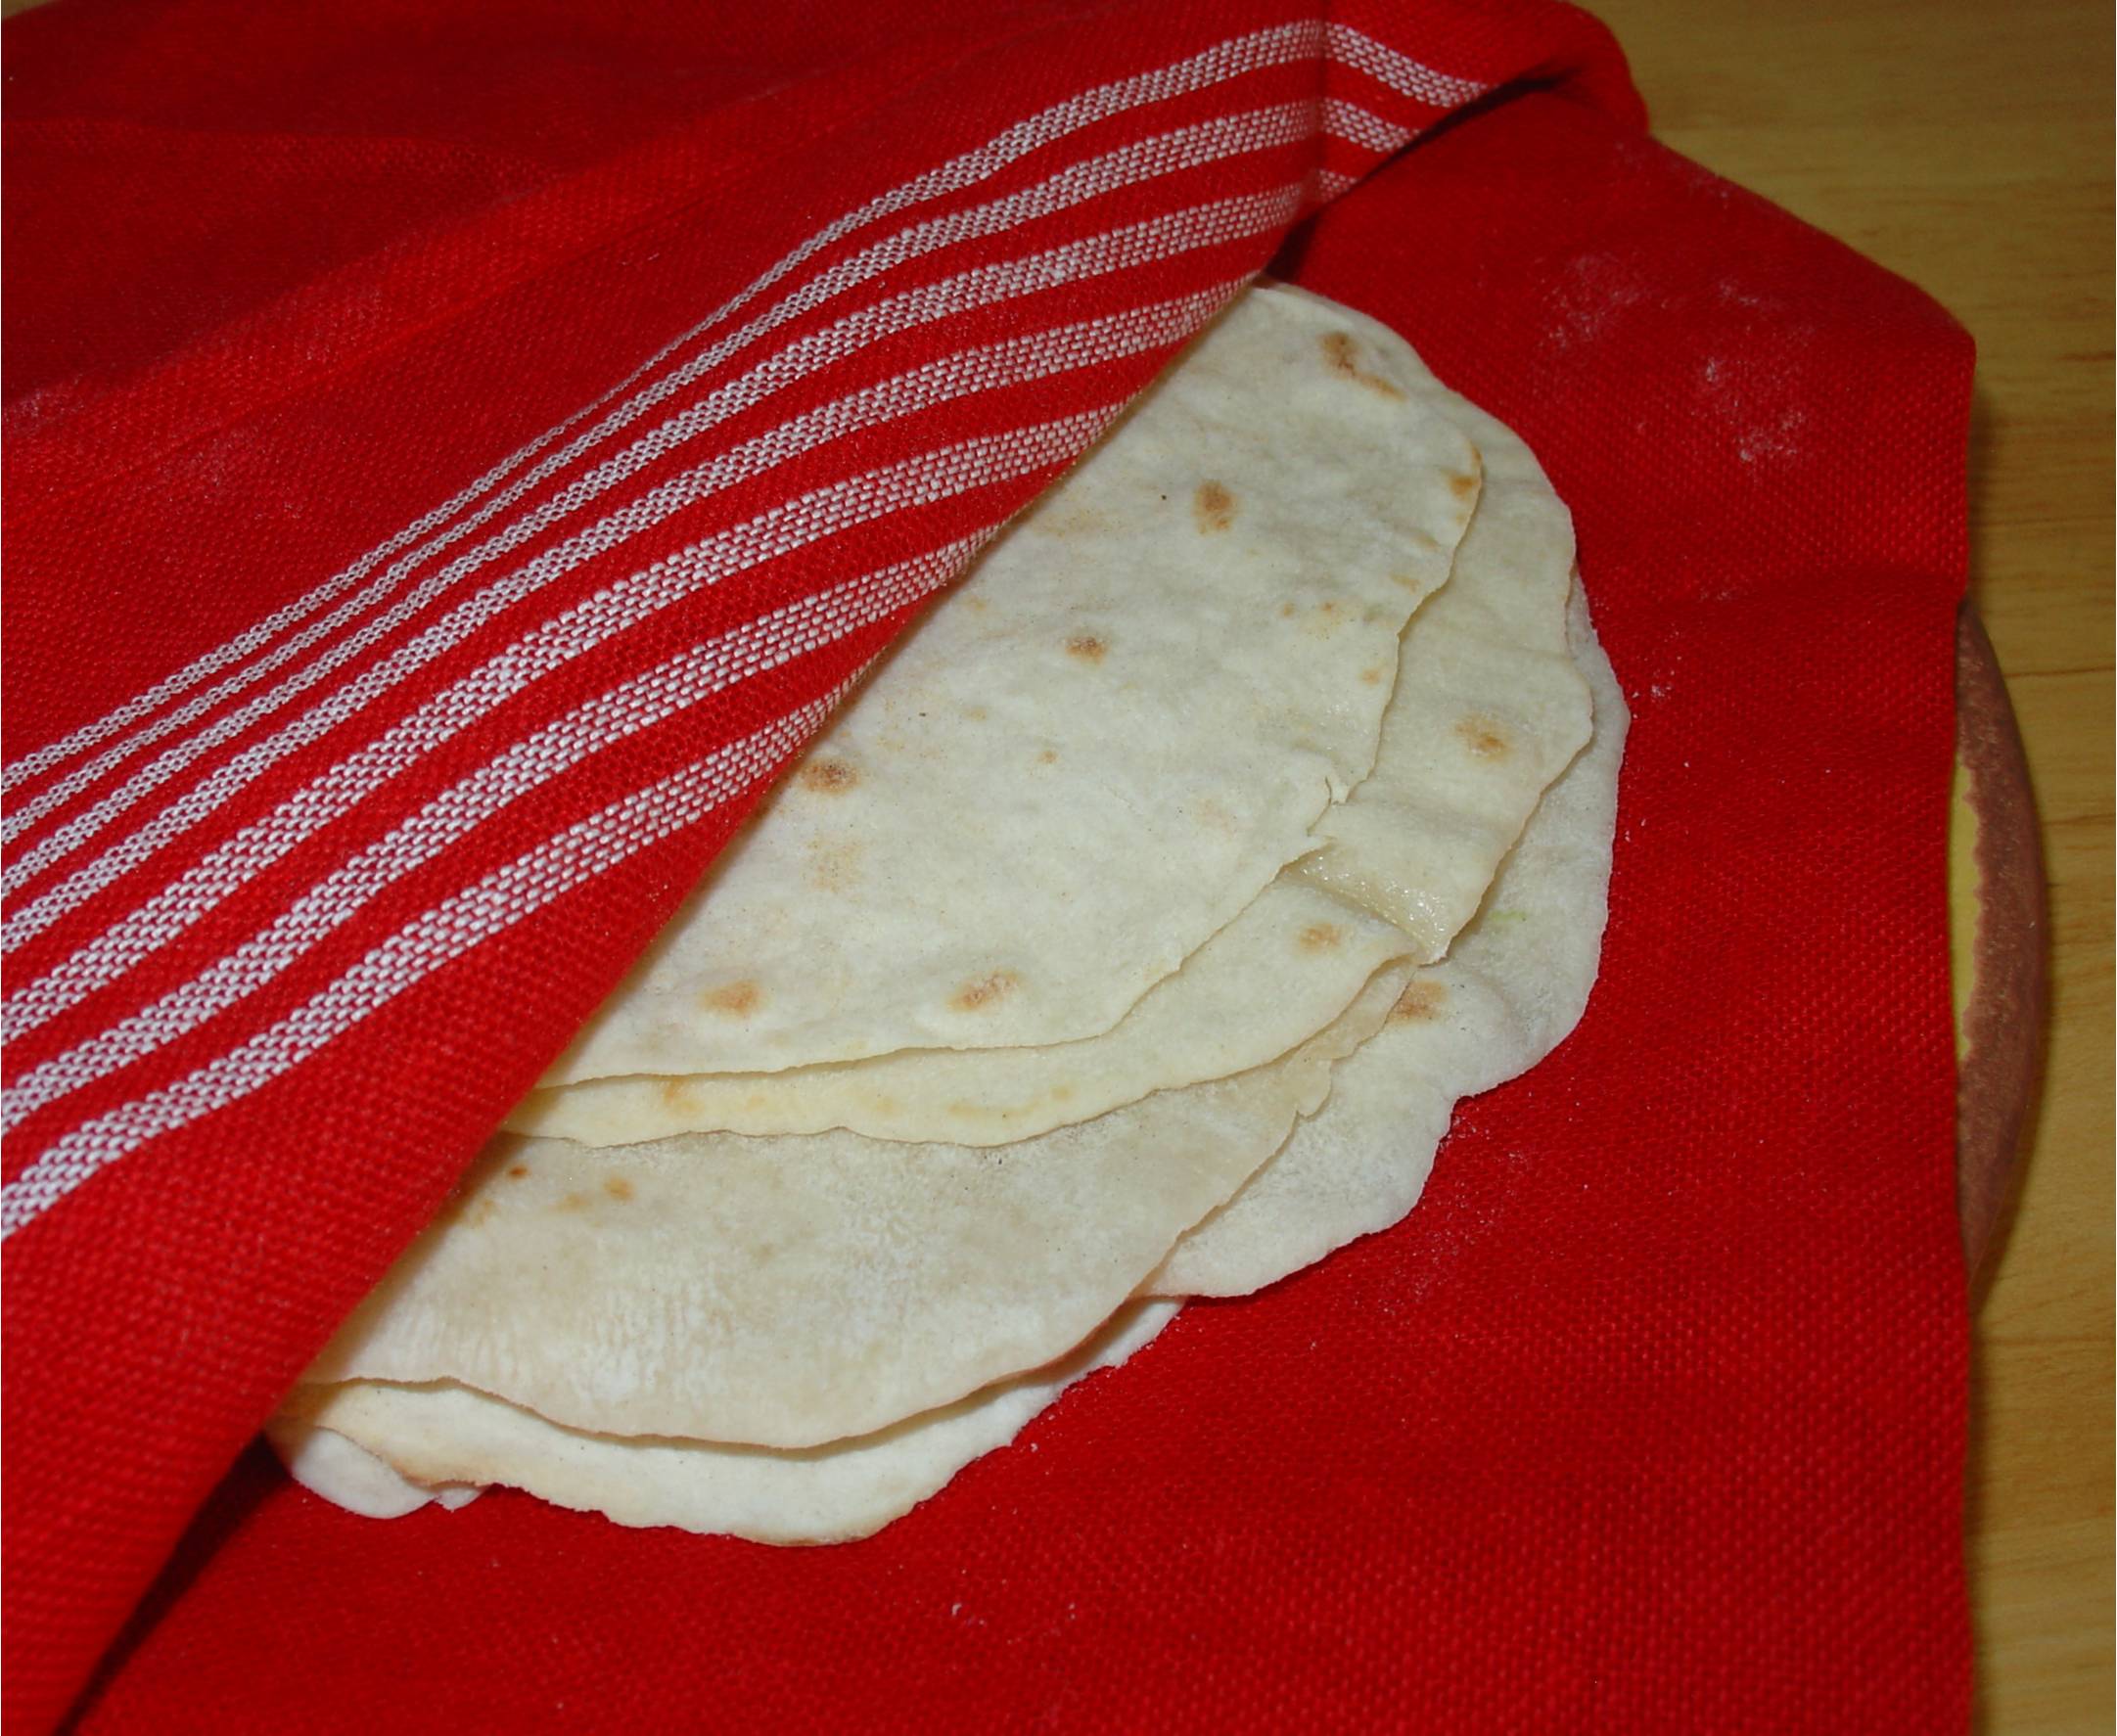 Homemade Flour Tortillas